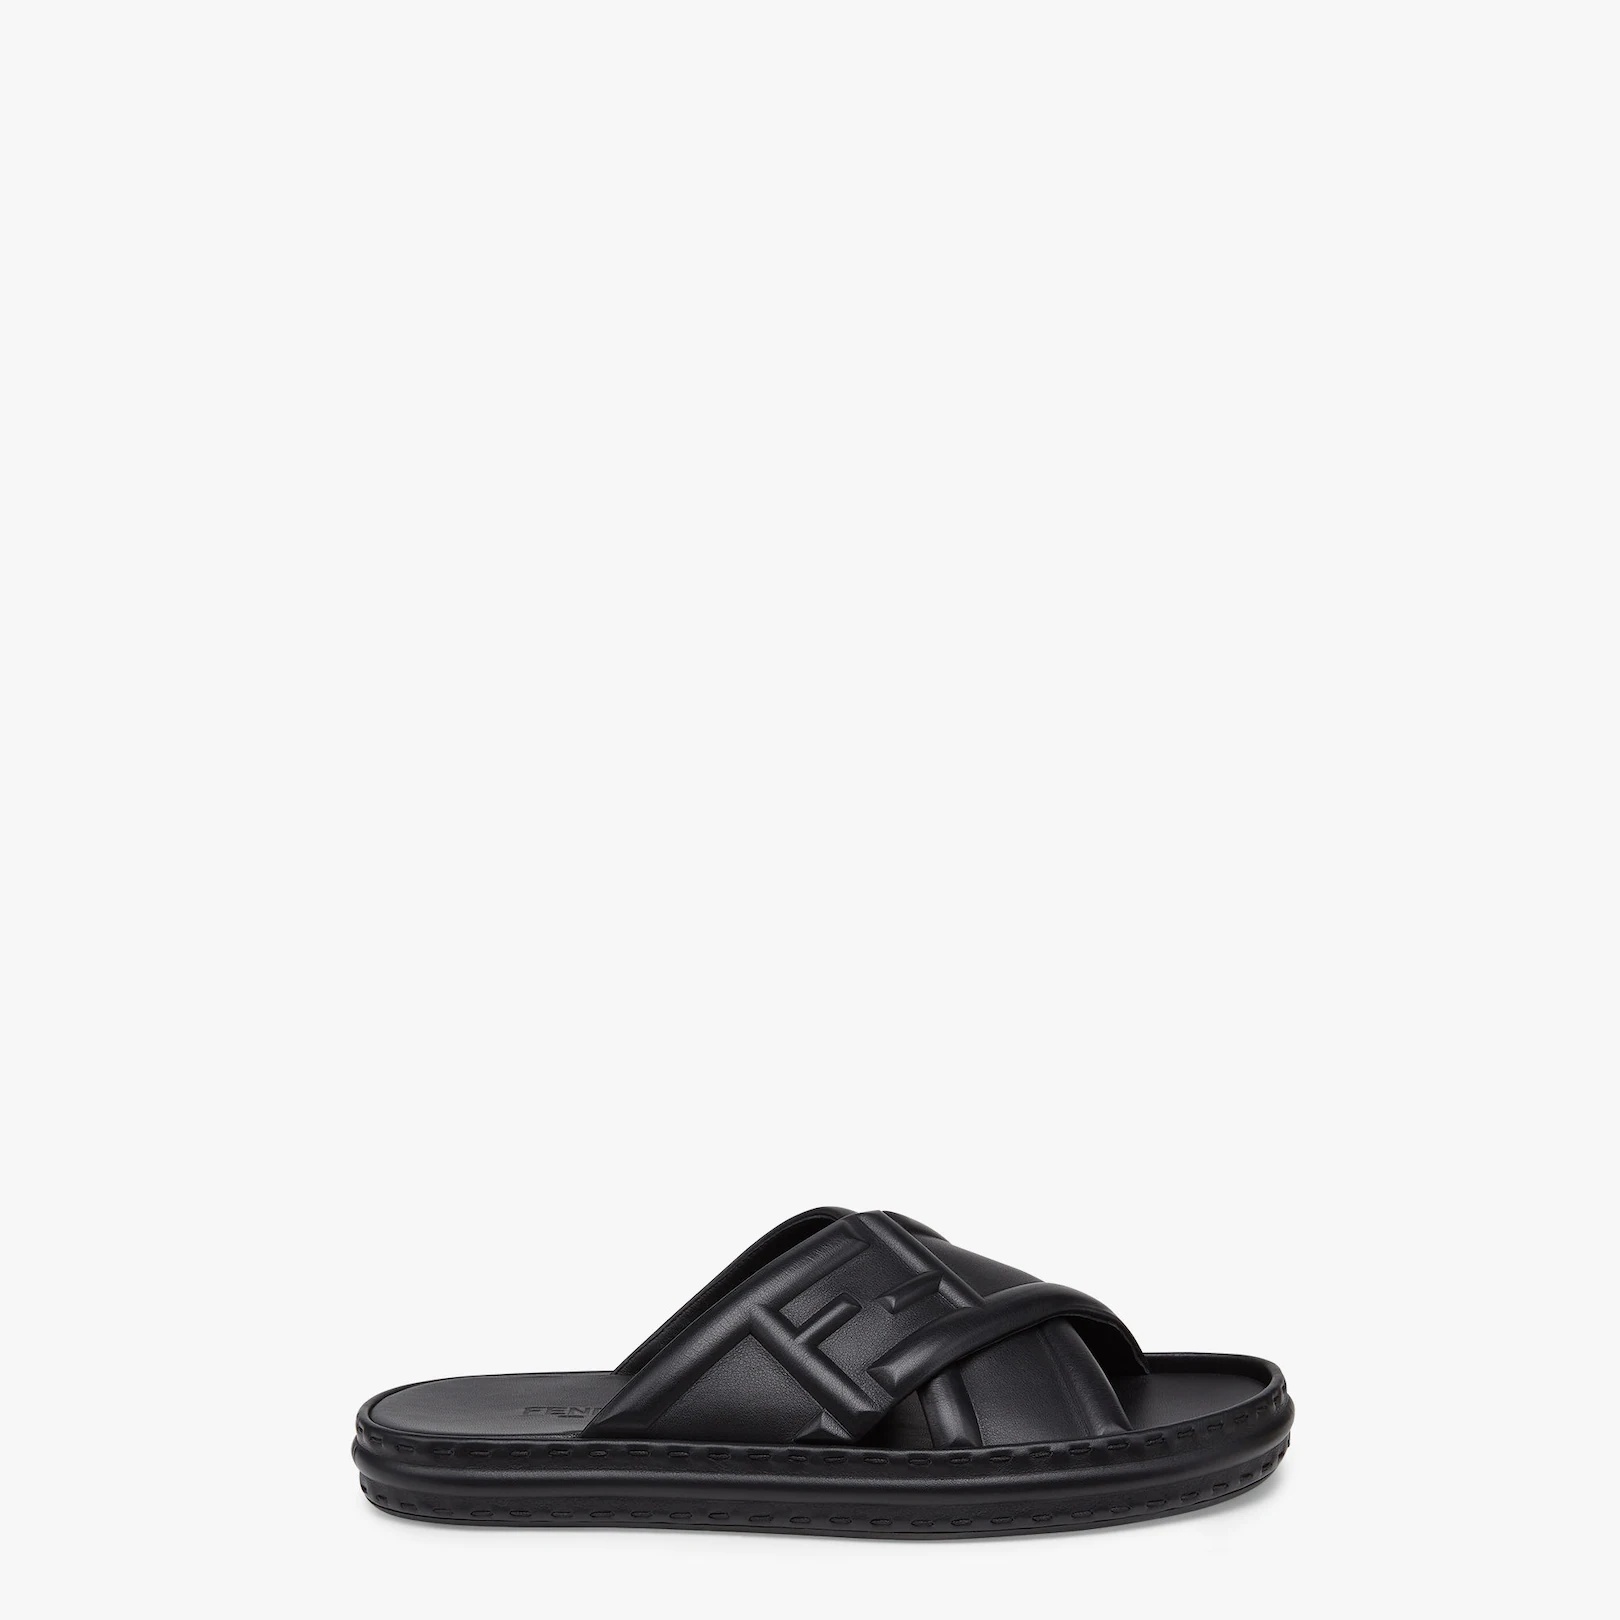 Black leather sandals - 1